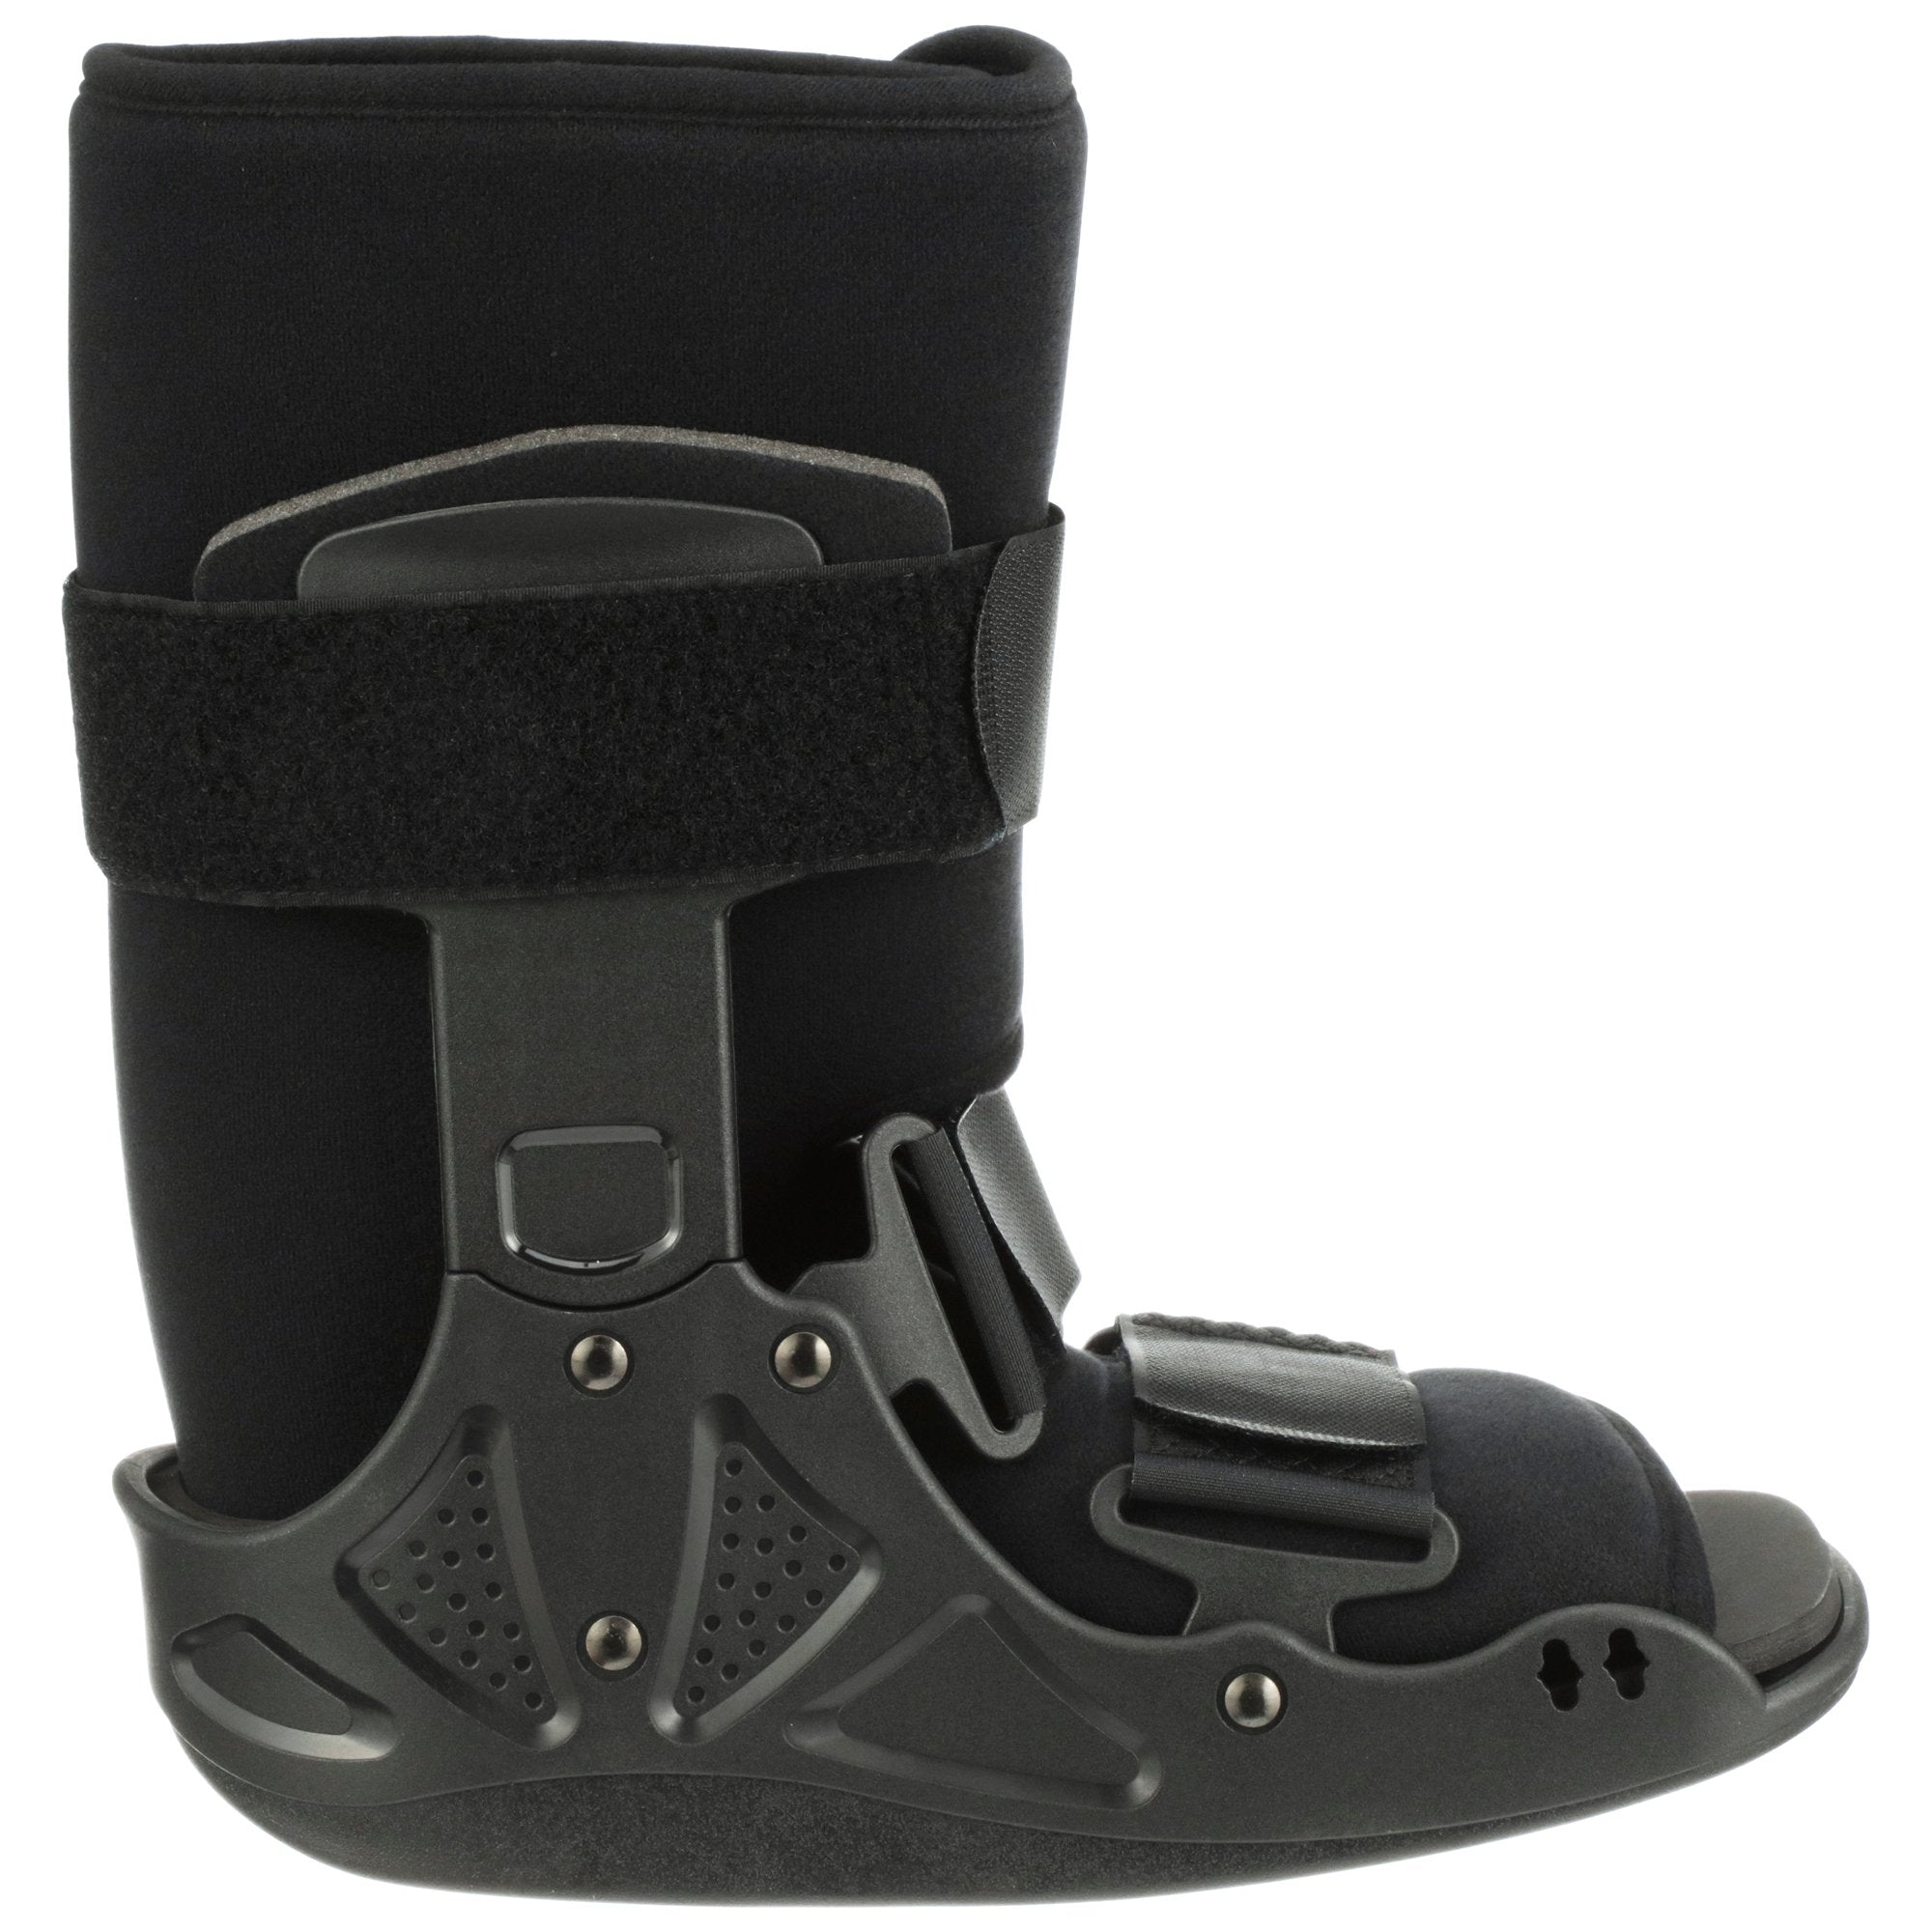 Walker Boot McKesson Non-Pneumatic Medium Left or Right Foot Adult